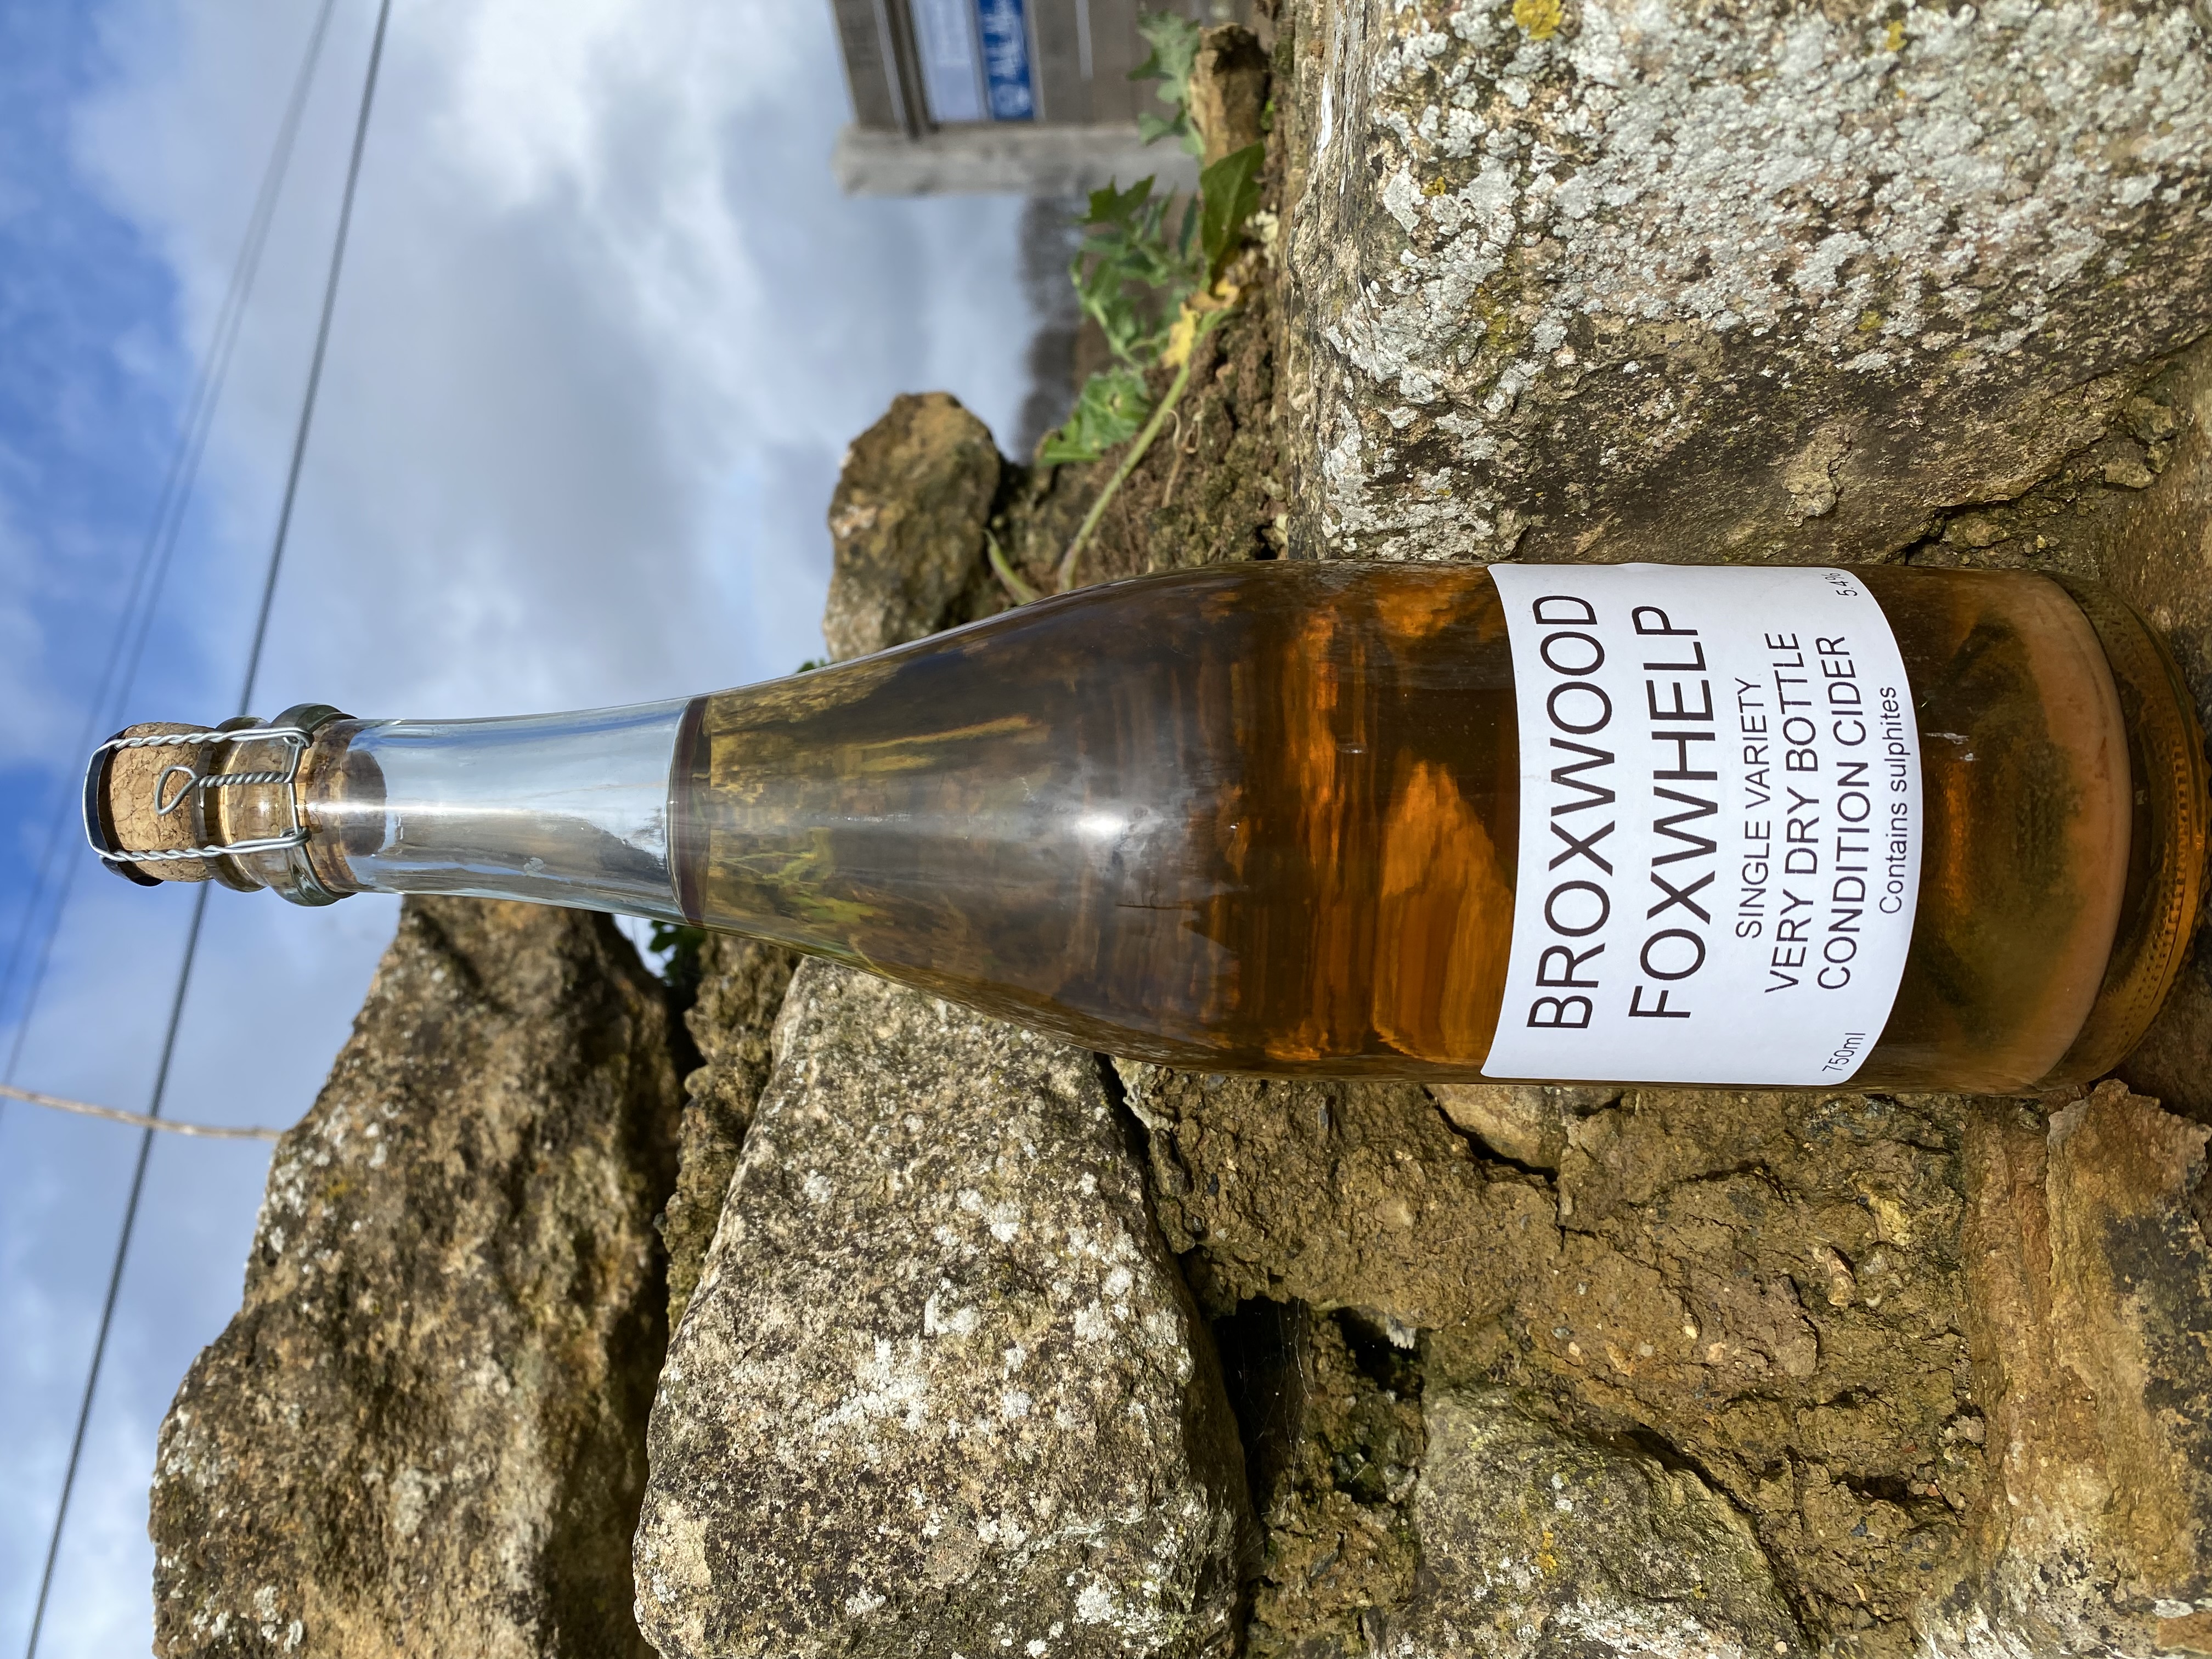 750ml bottle of hecks Broxwood Foxwhelp cider